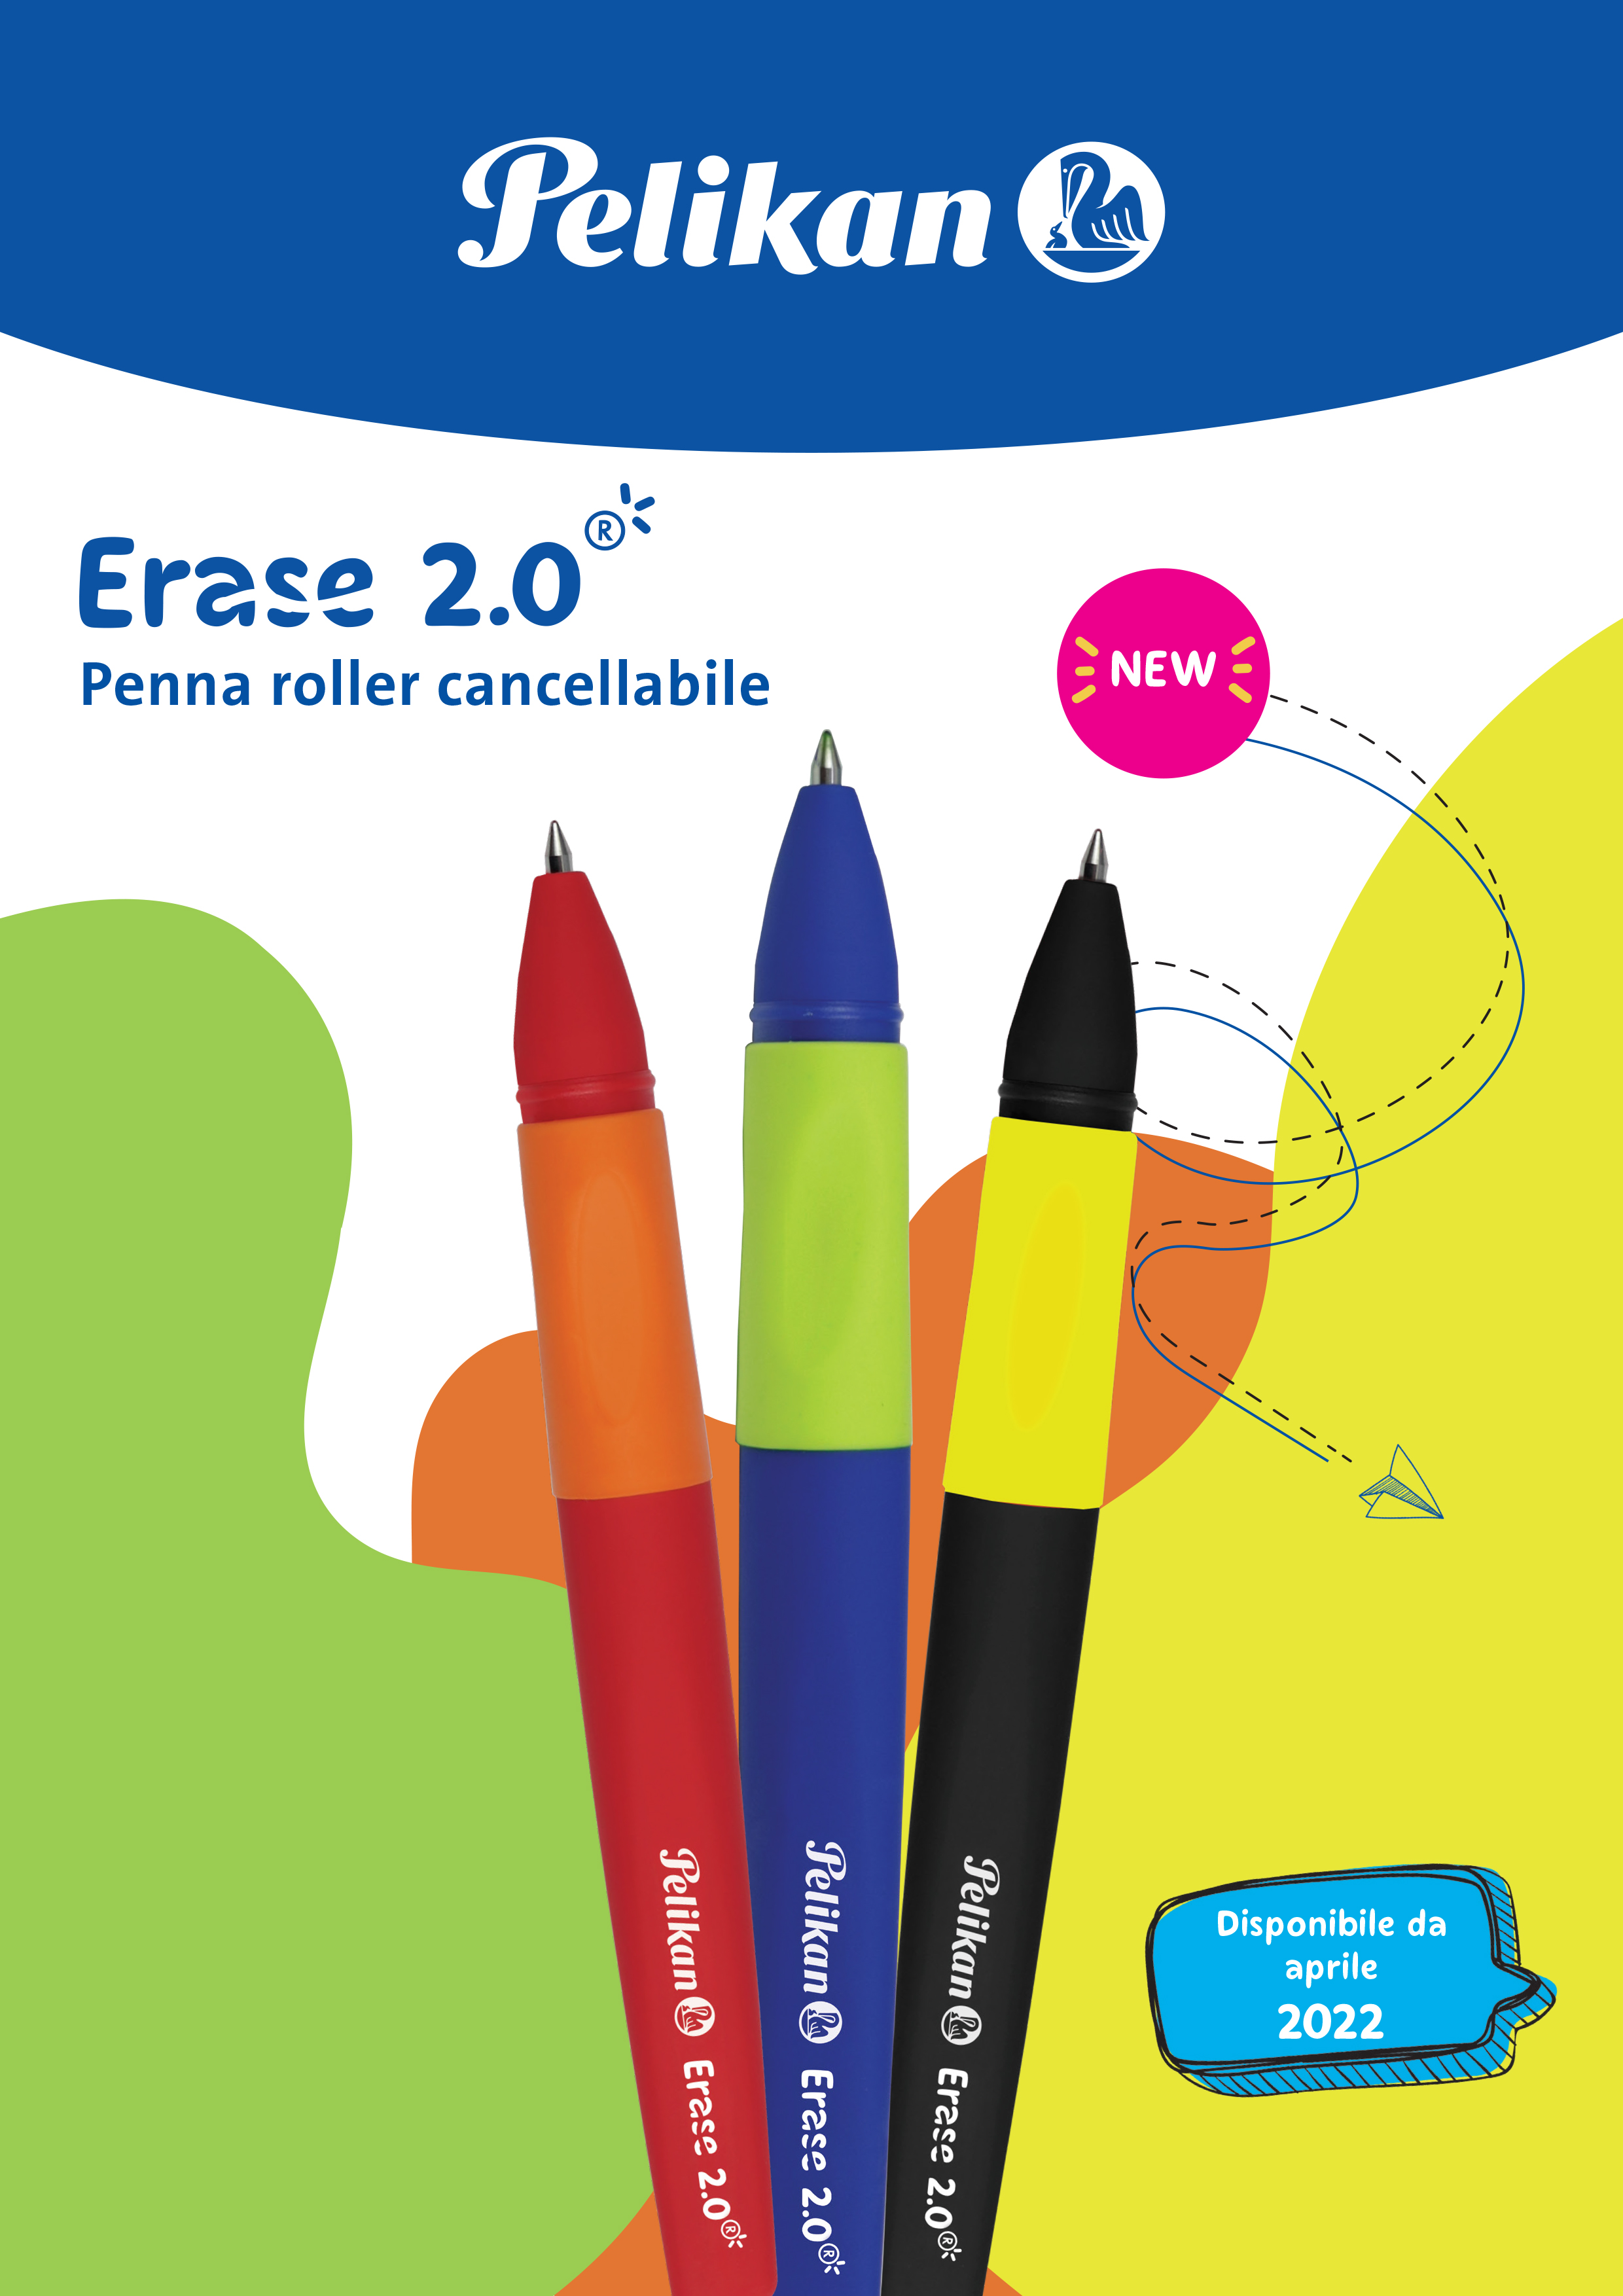 Penna gel cancellabile Erase 2.0 Pelikan